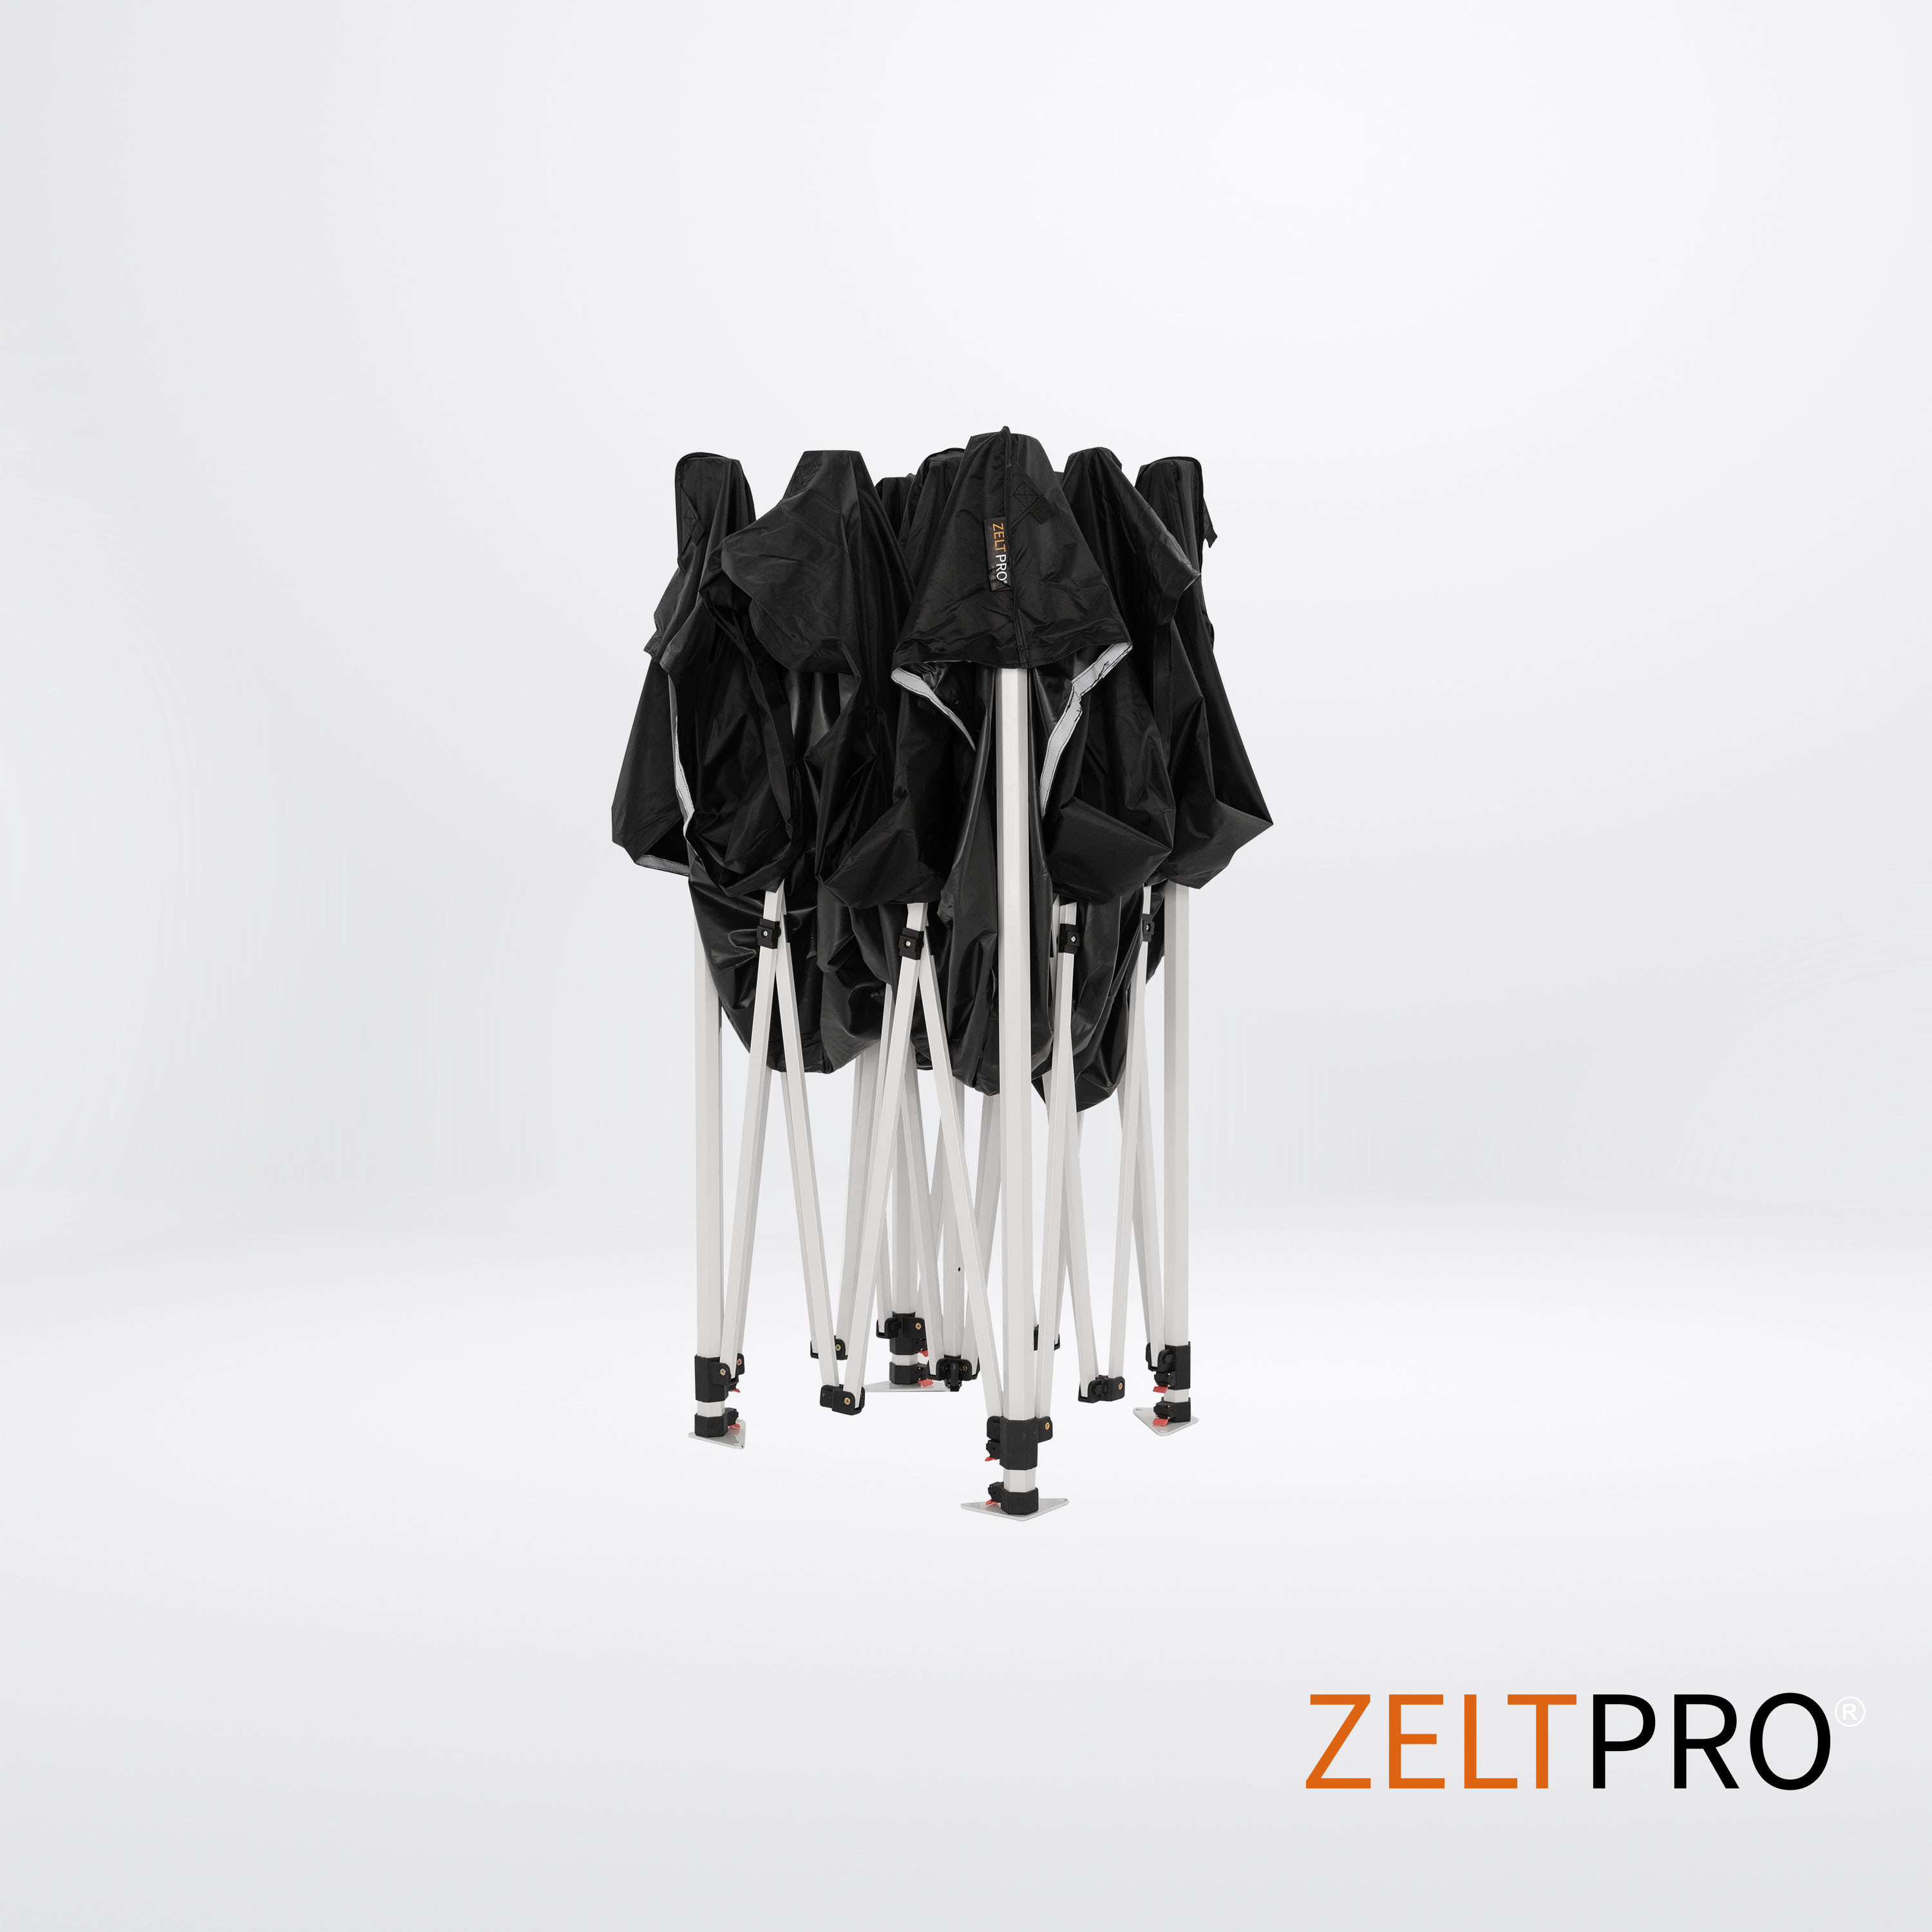 Pop-up telk 2x2 must Zeltpro PROFRAME